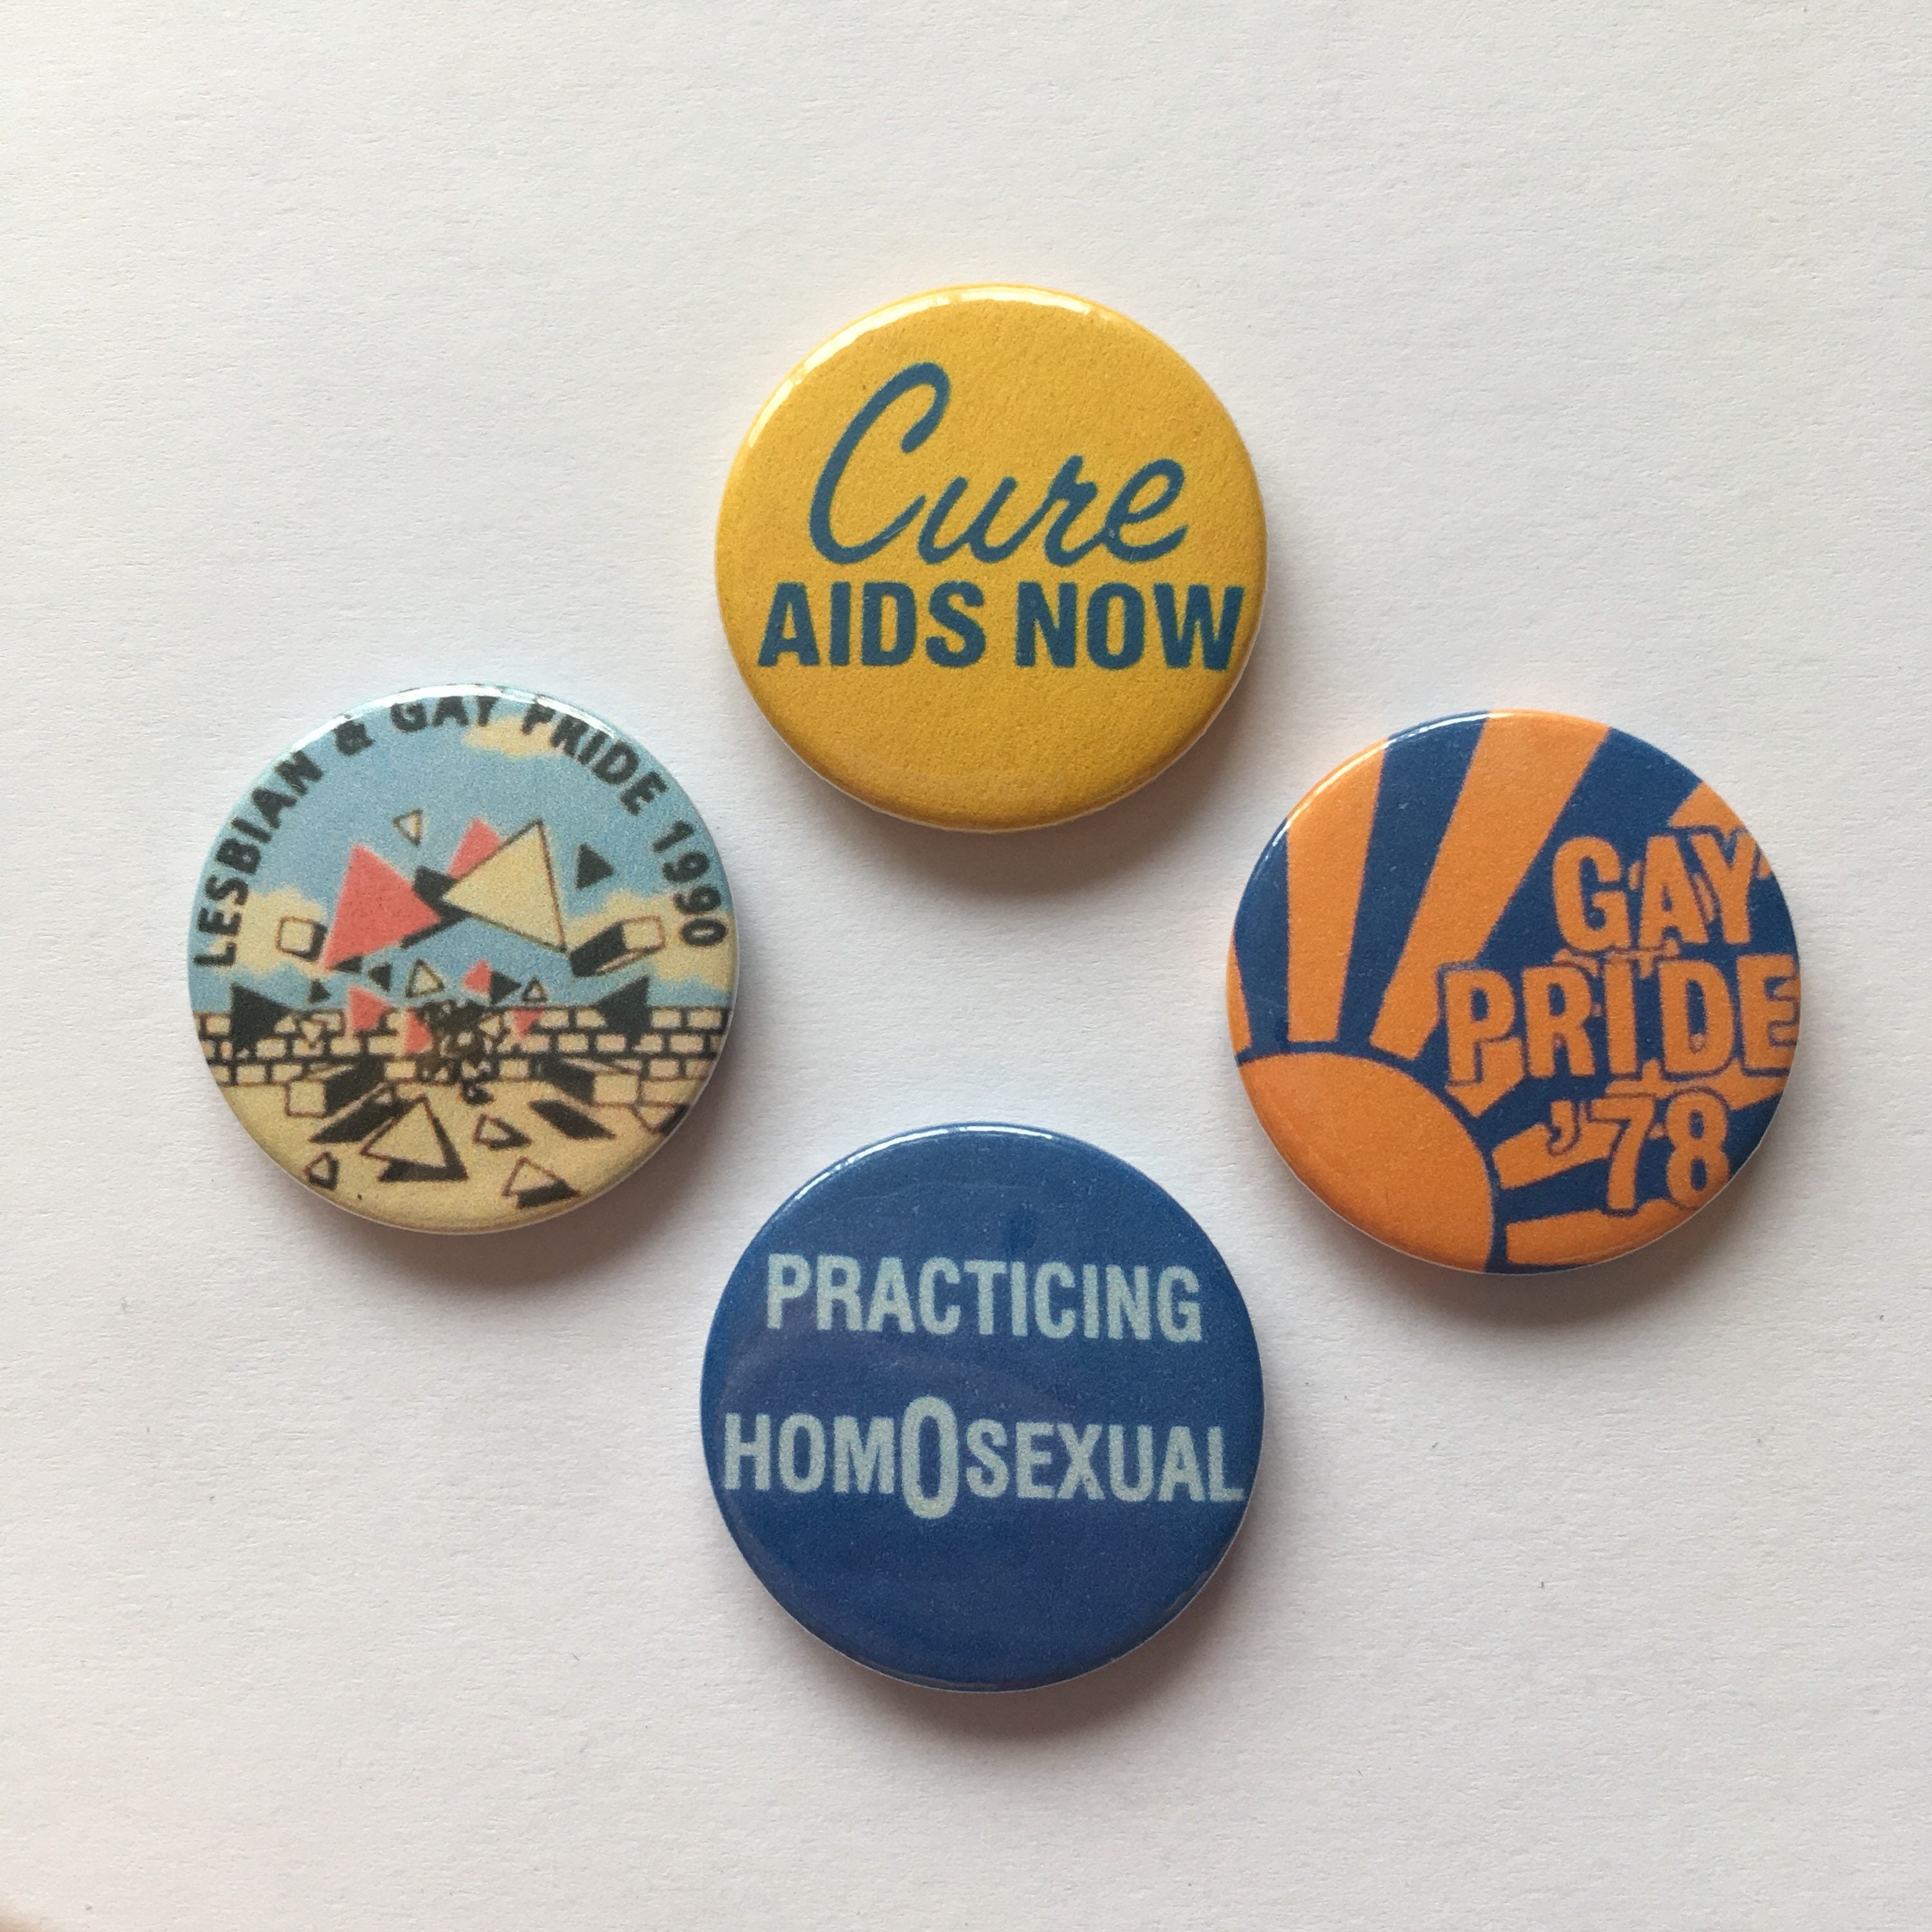 Vintage Style Button Badge – Transgender Meaning – The Pride Shop Wholesale